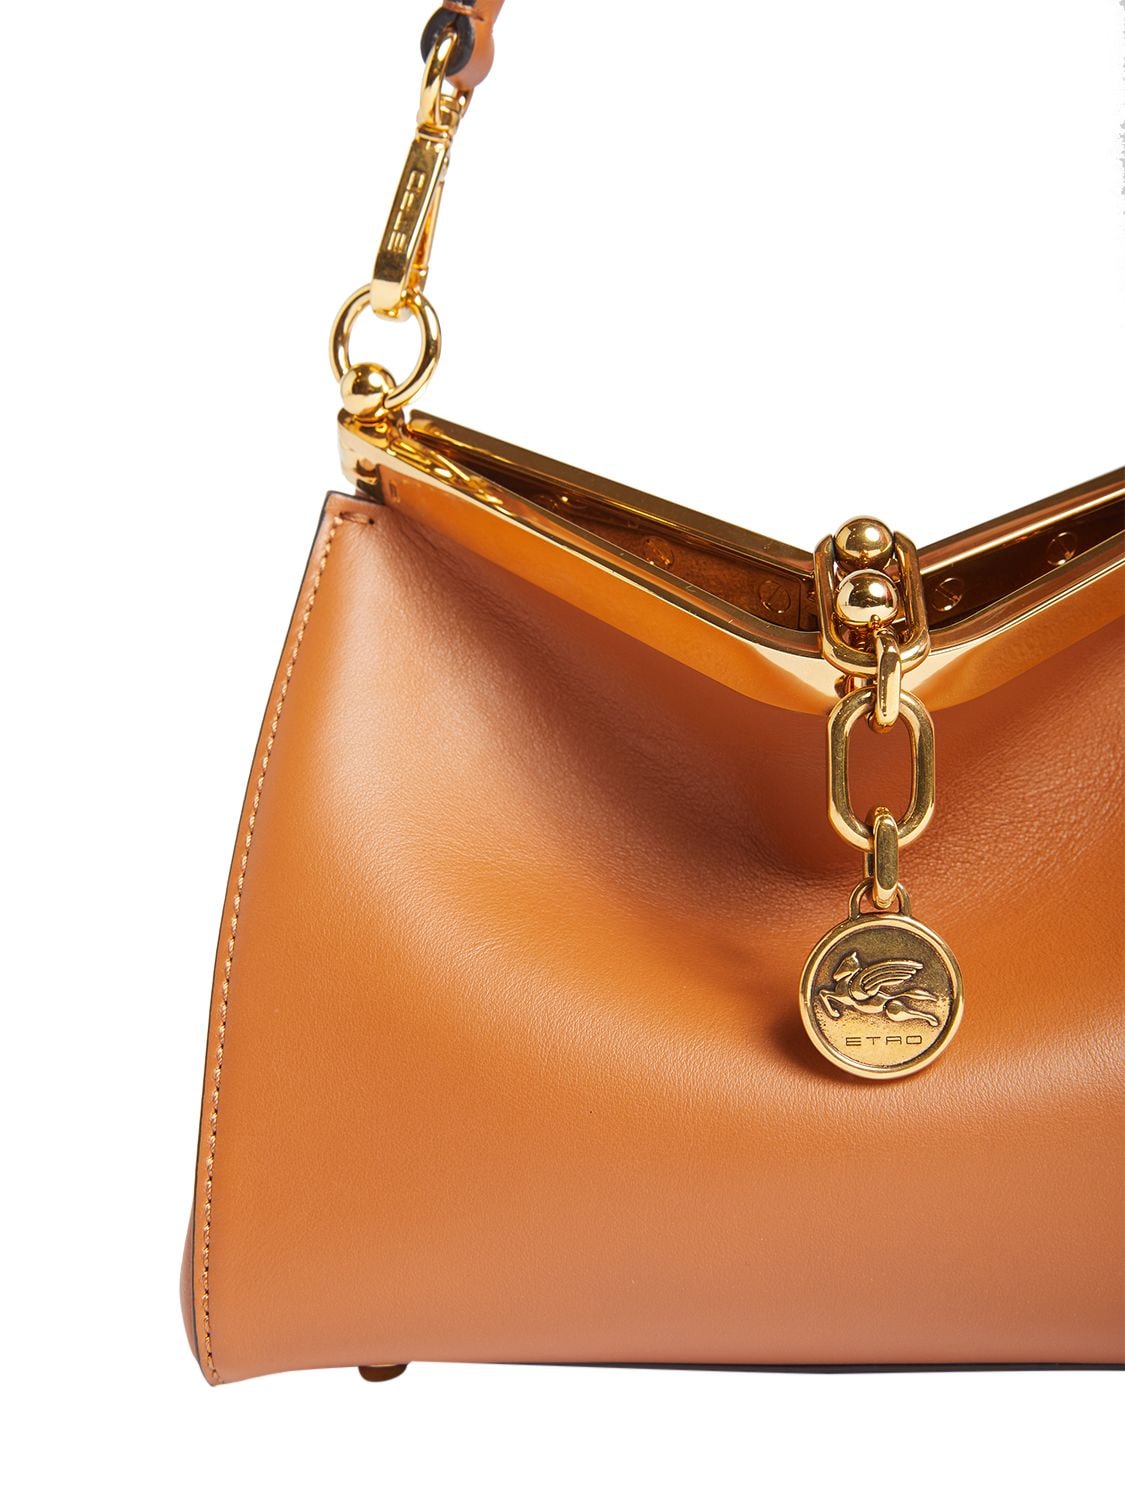 Etro Drops New Mini Vela Handbag